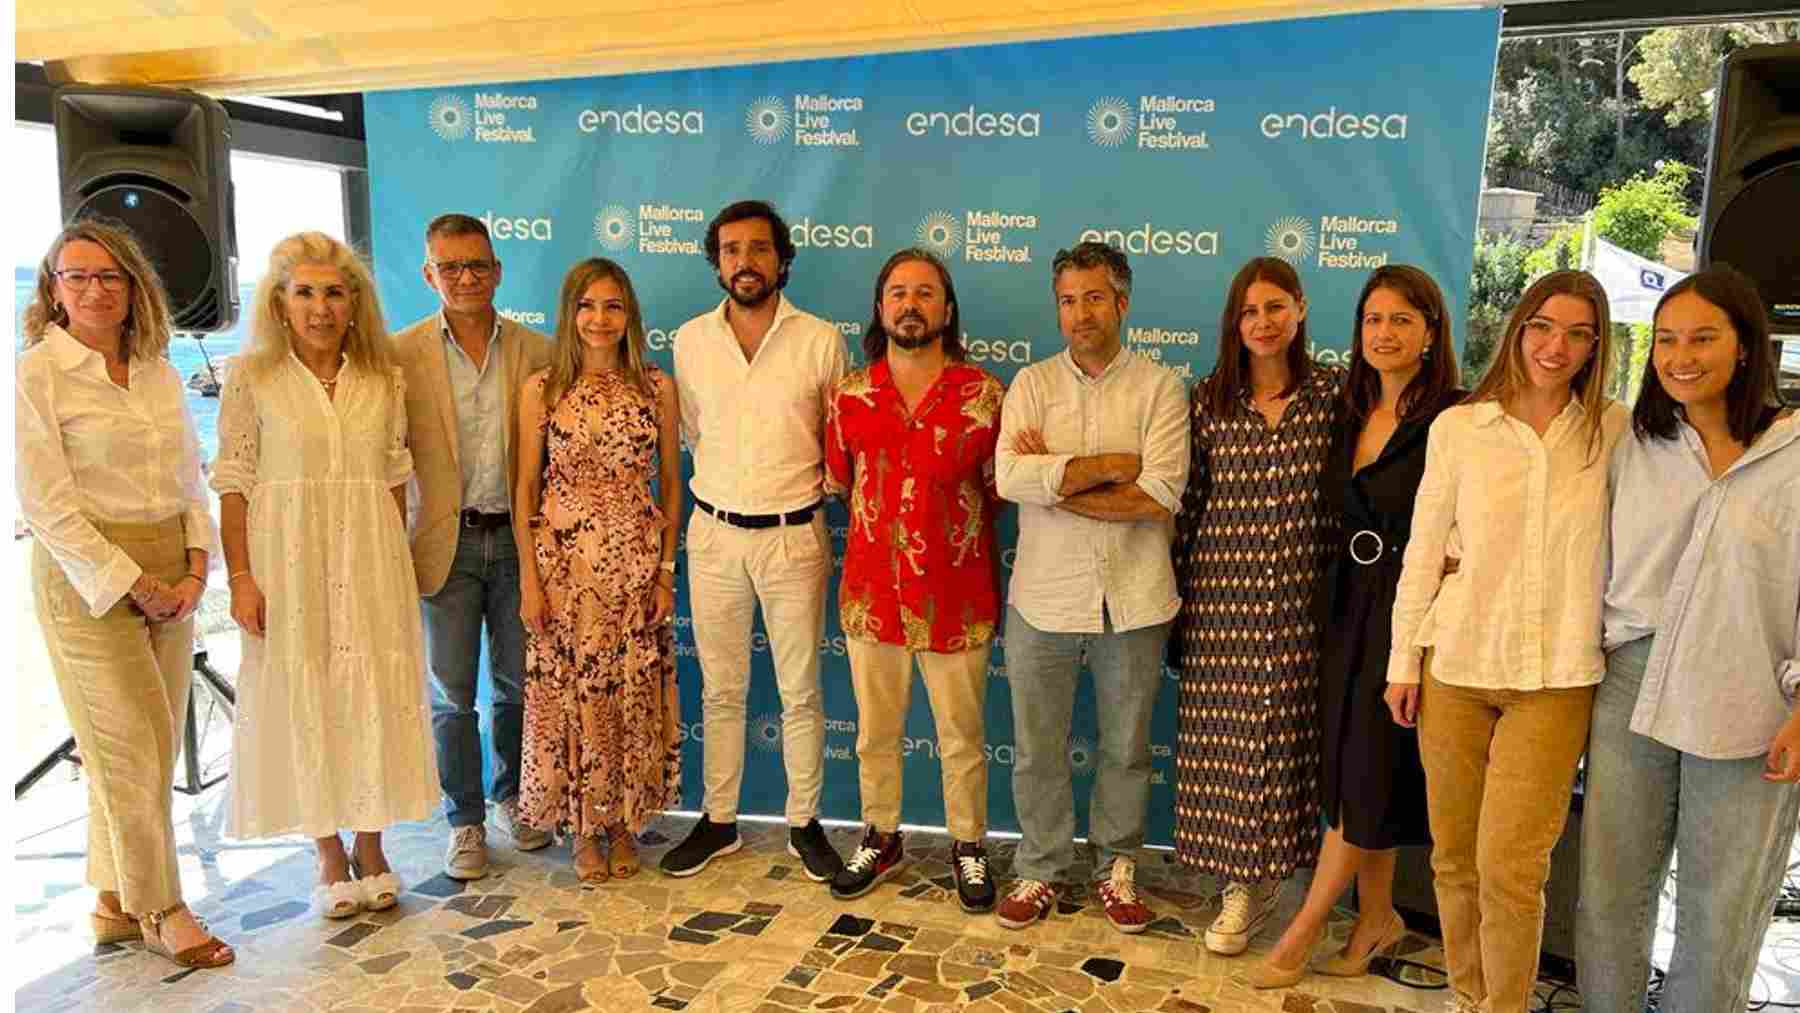 Presentación de Endesa como patrocinador sostenible del Mallorca Live Festival.